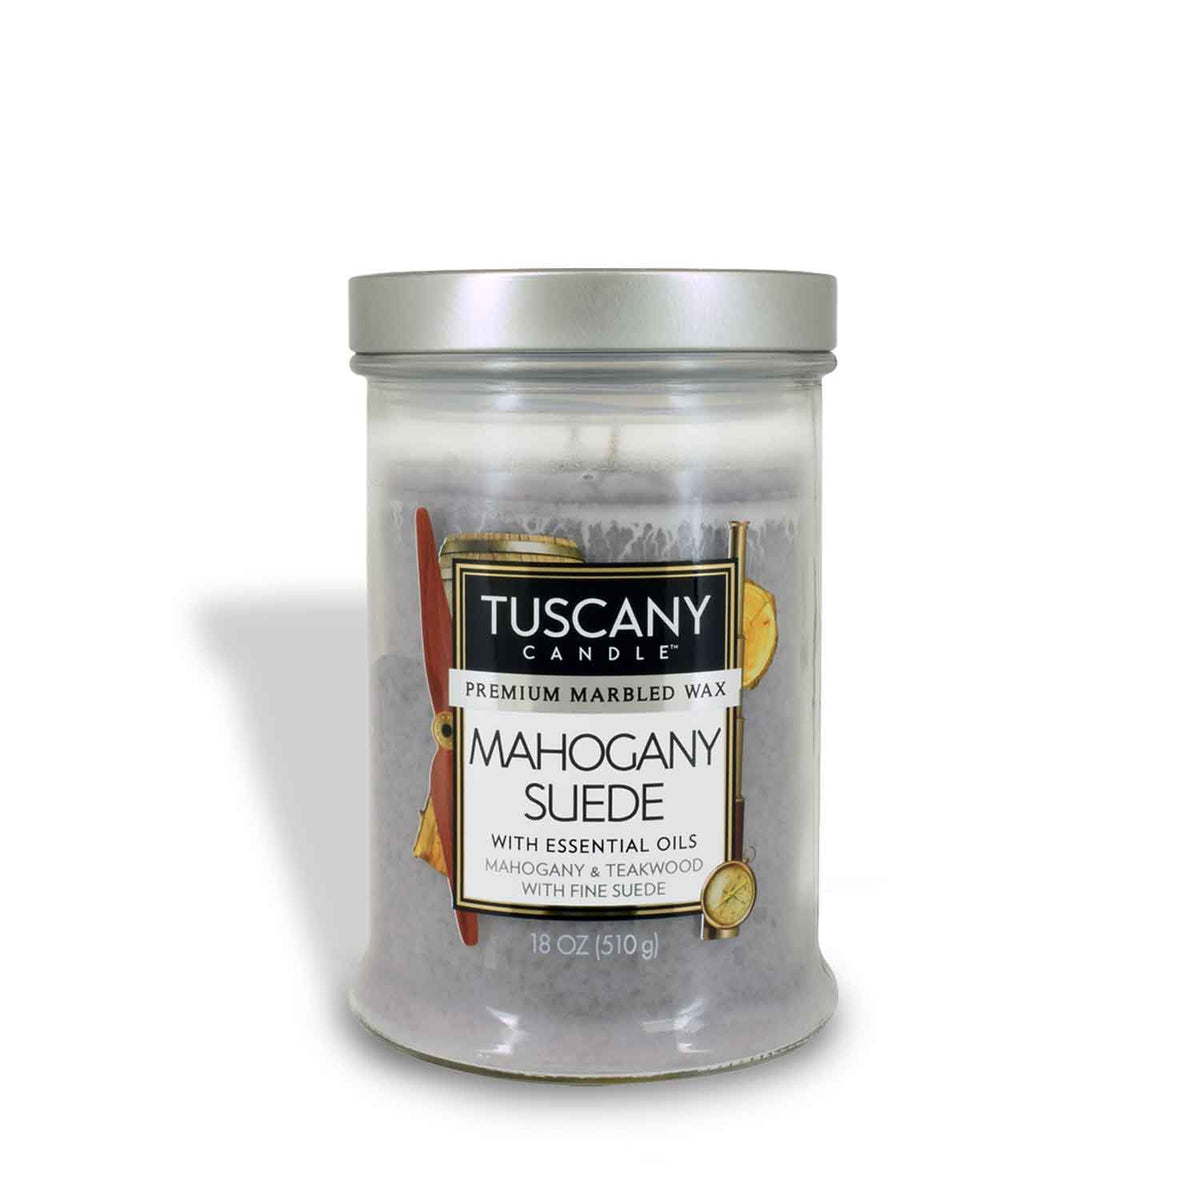 mahogany teakwood – Sweet Delight candles